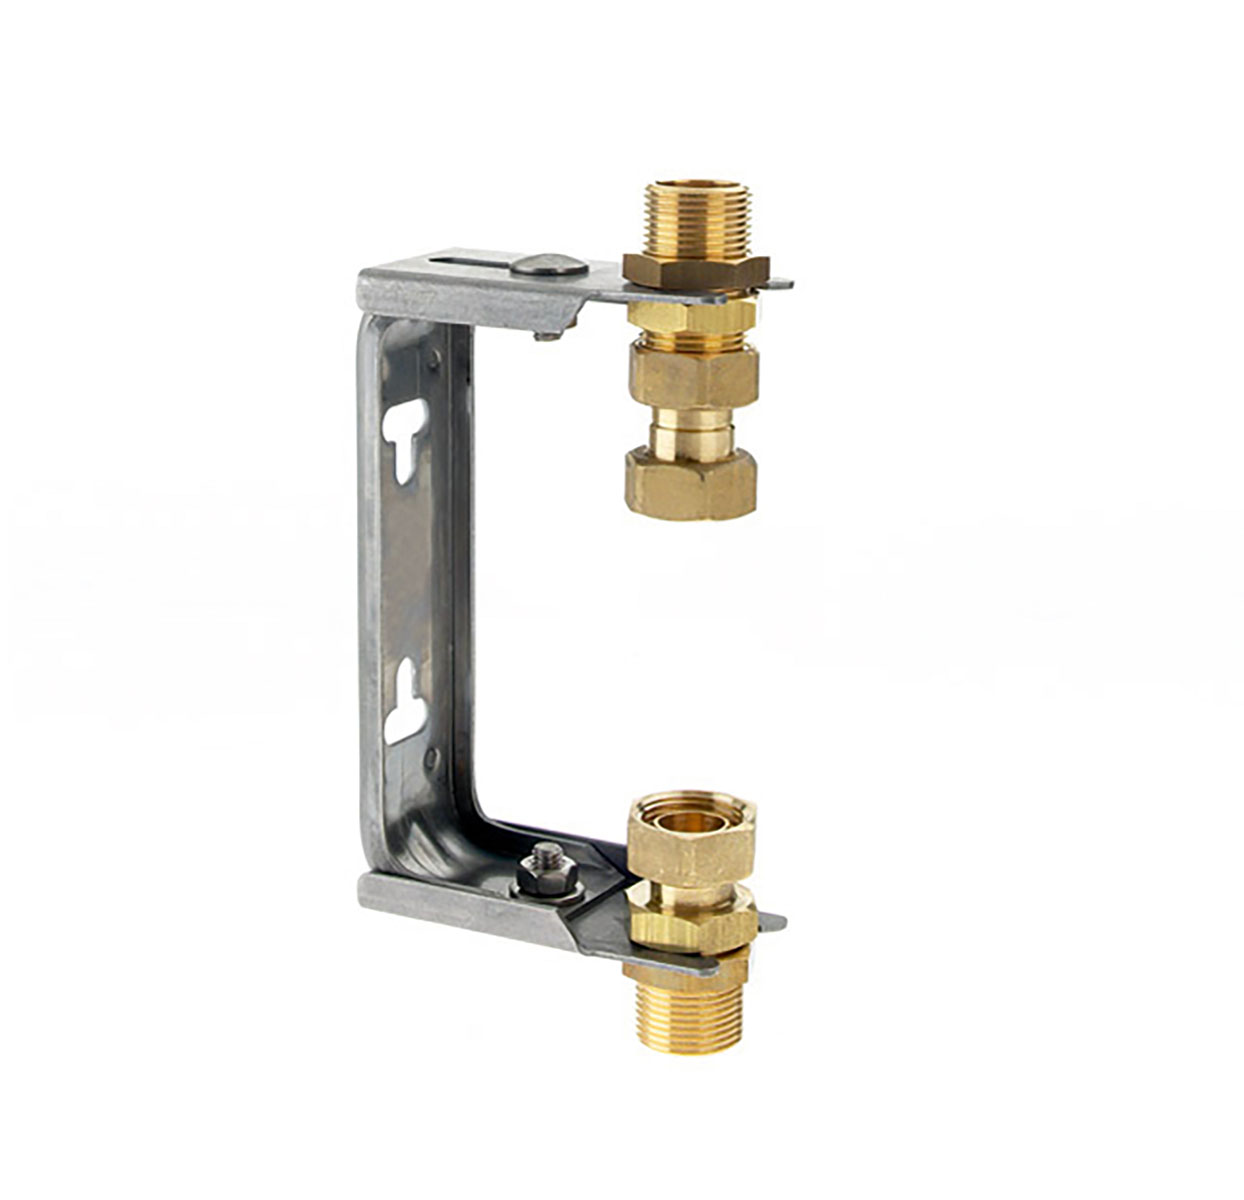 5097320 - Water meter Connection kit bracket adjustable, vertical installation